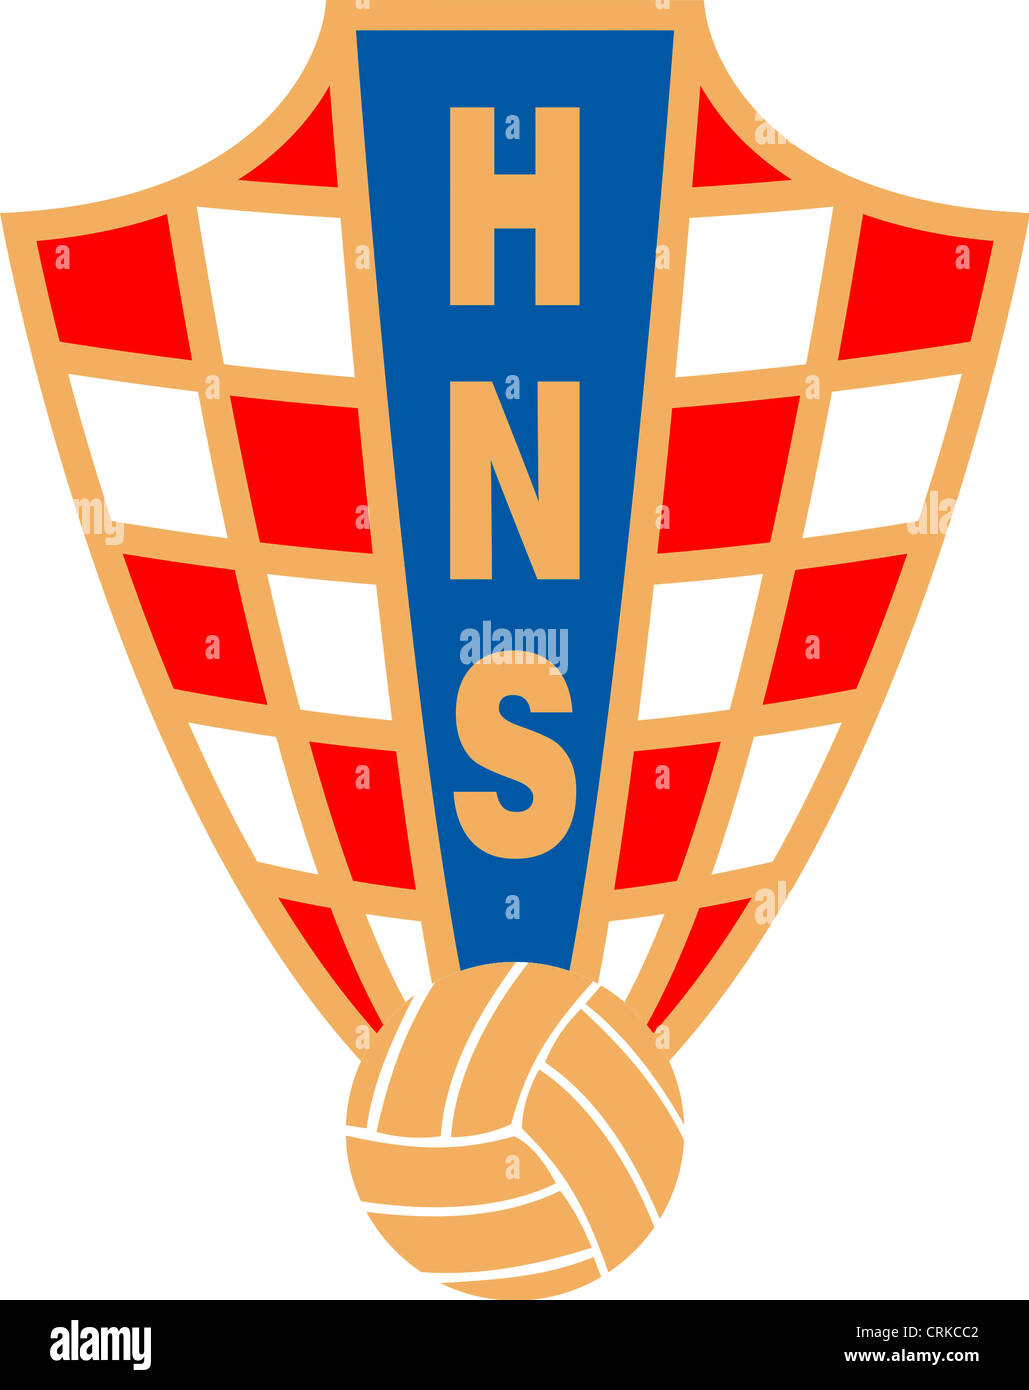 Logo of the Croatian Football Federation Hrvatski nogometri savez HNS and the National team. Stock Photo